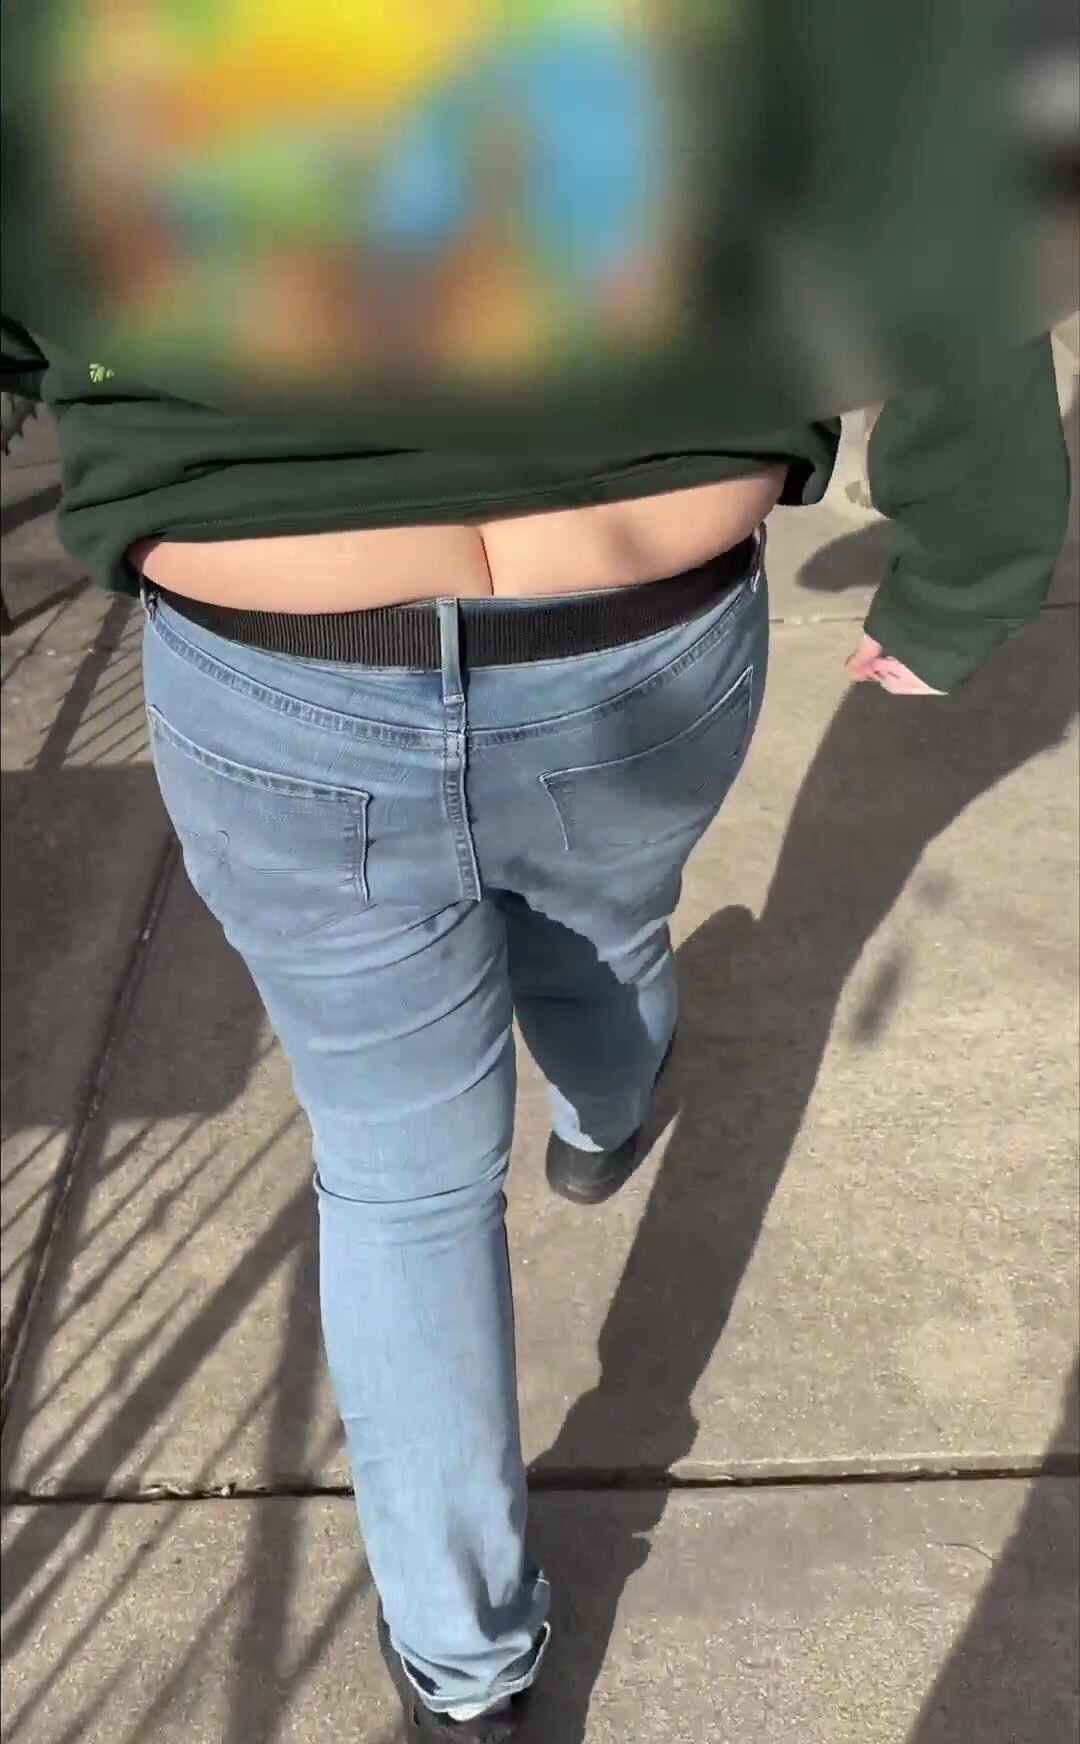 Girl wetting jeans in public - video 6